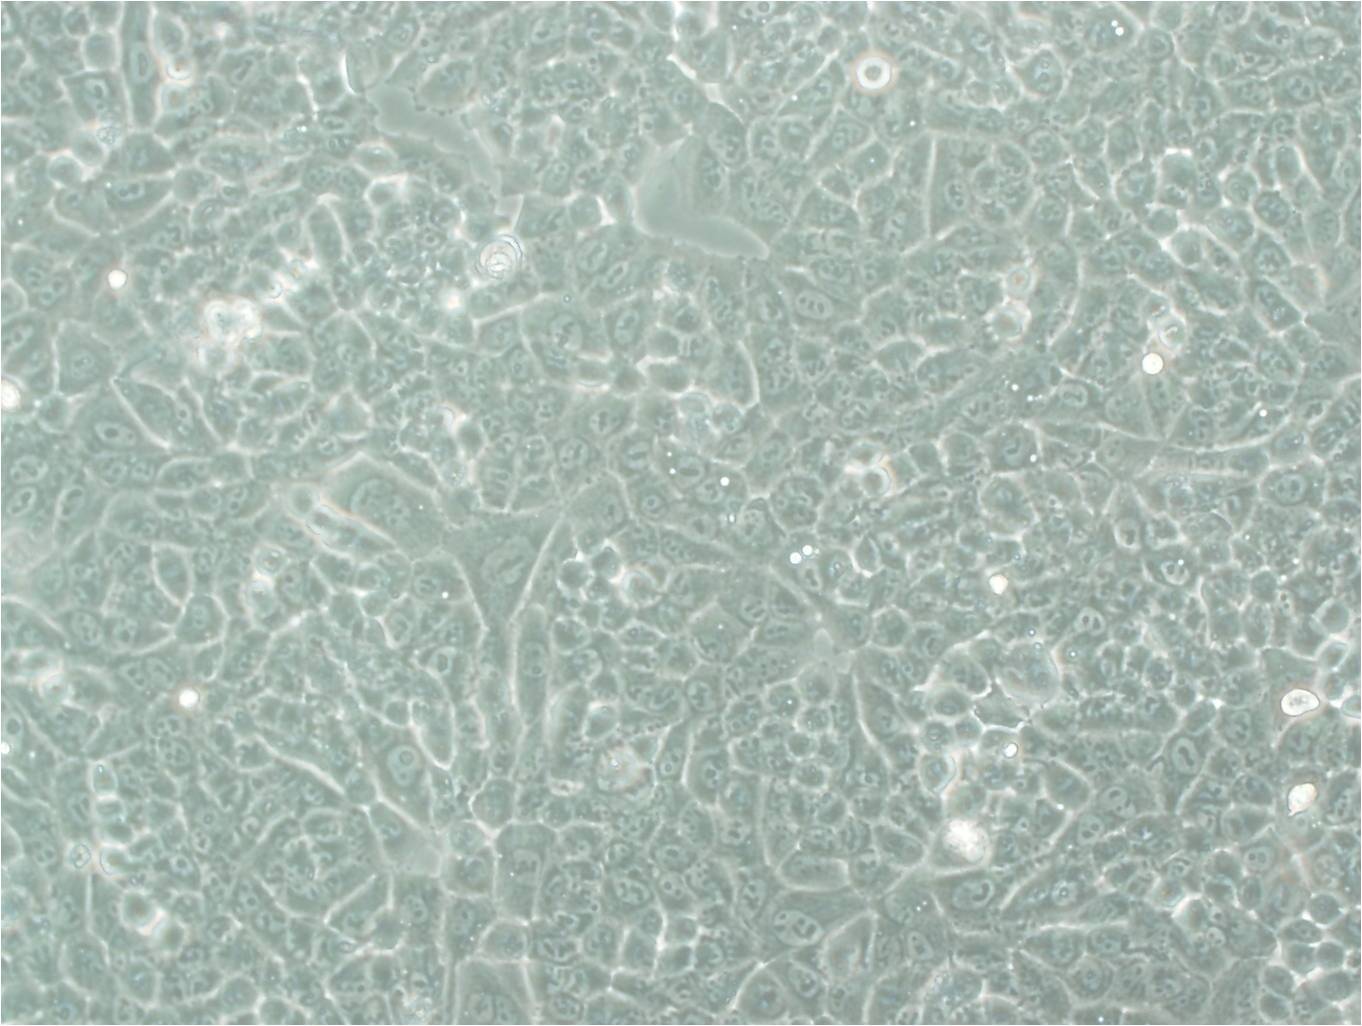 VP229 epithelioid cells人乳腺癌细胞系